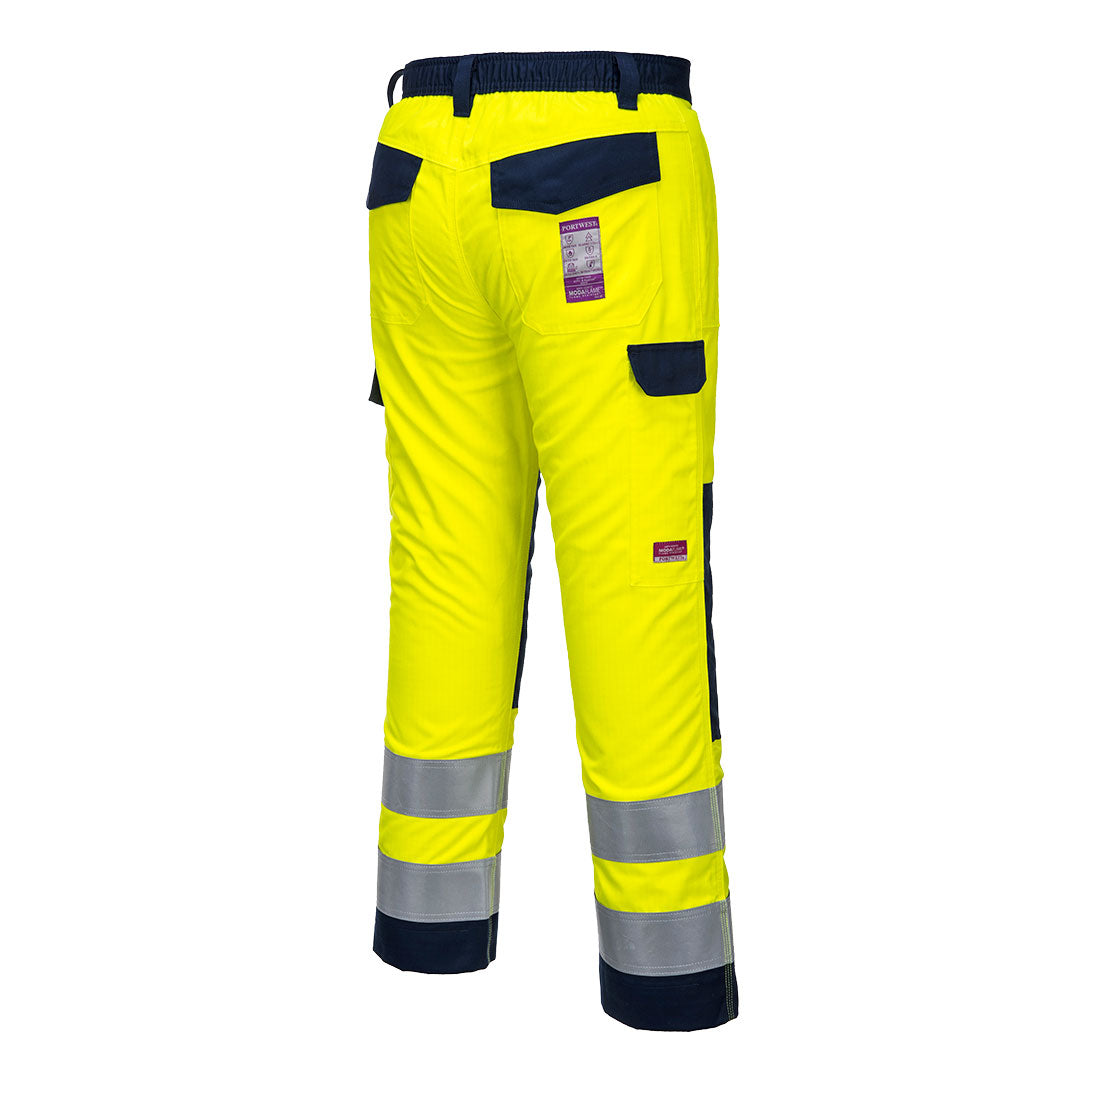 Portwest MV46 Hi Vis Modaflame Flame Retardant Trousers 1#colour_yellow-navy 2#colour_yellow-navy 3#colour_yellow-navy